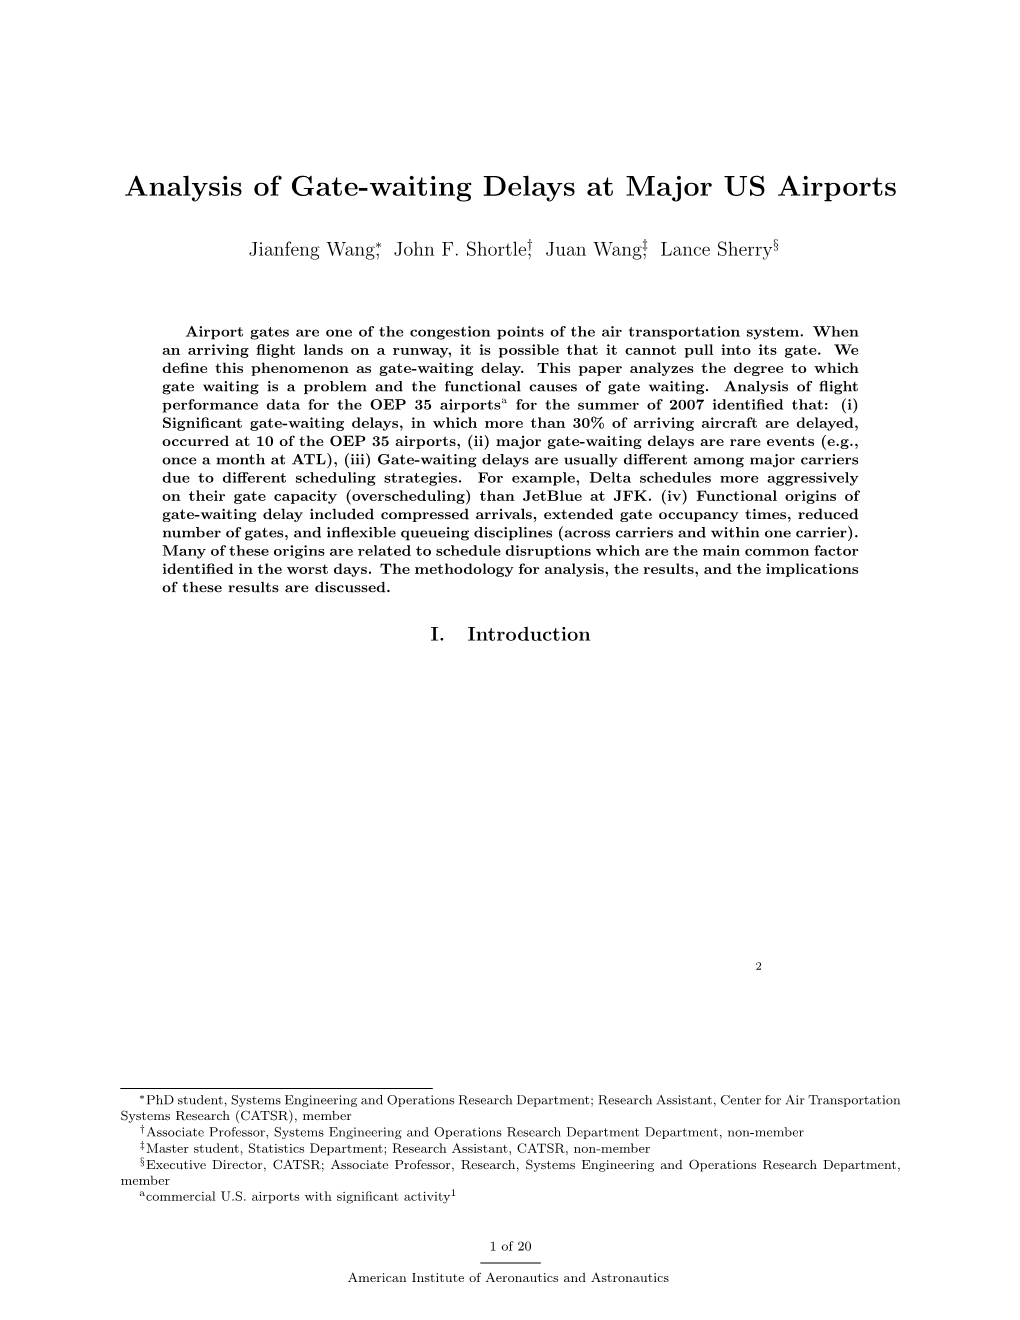 Analysis of Gate-Waiting Delays at Major US Airports